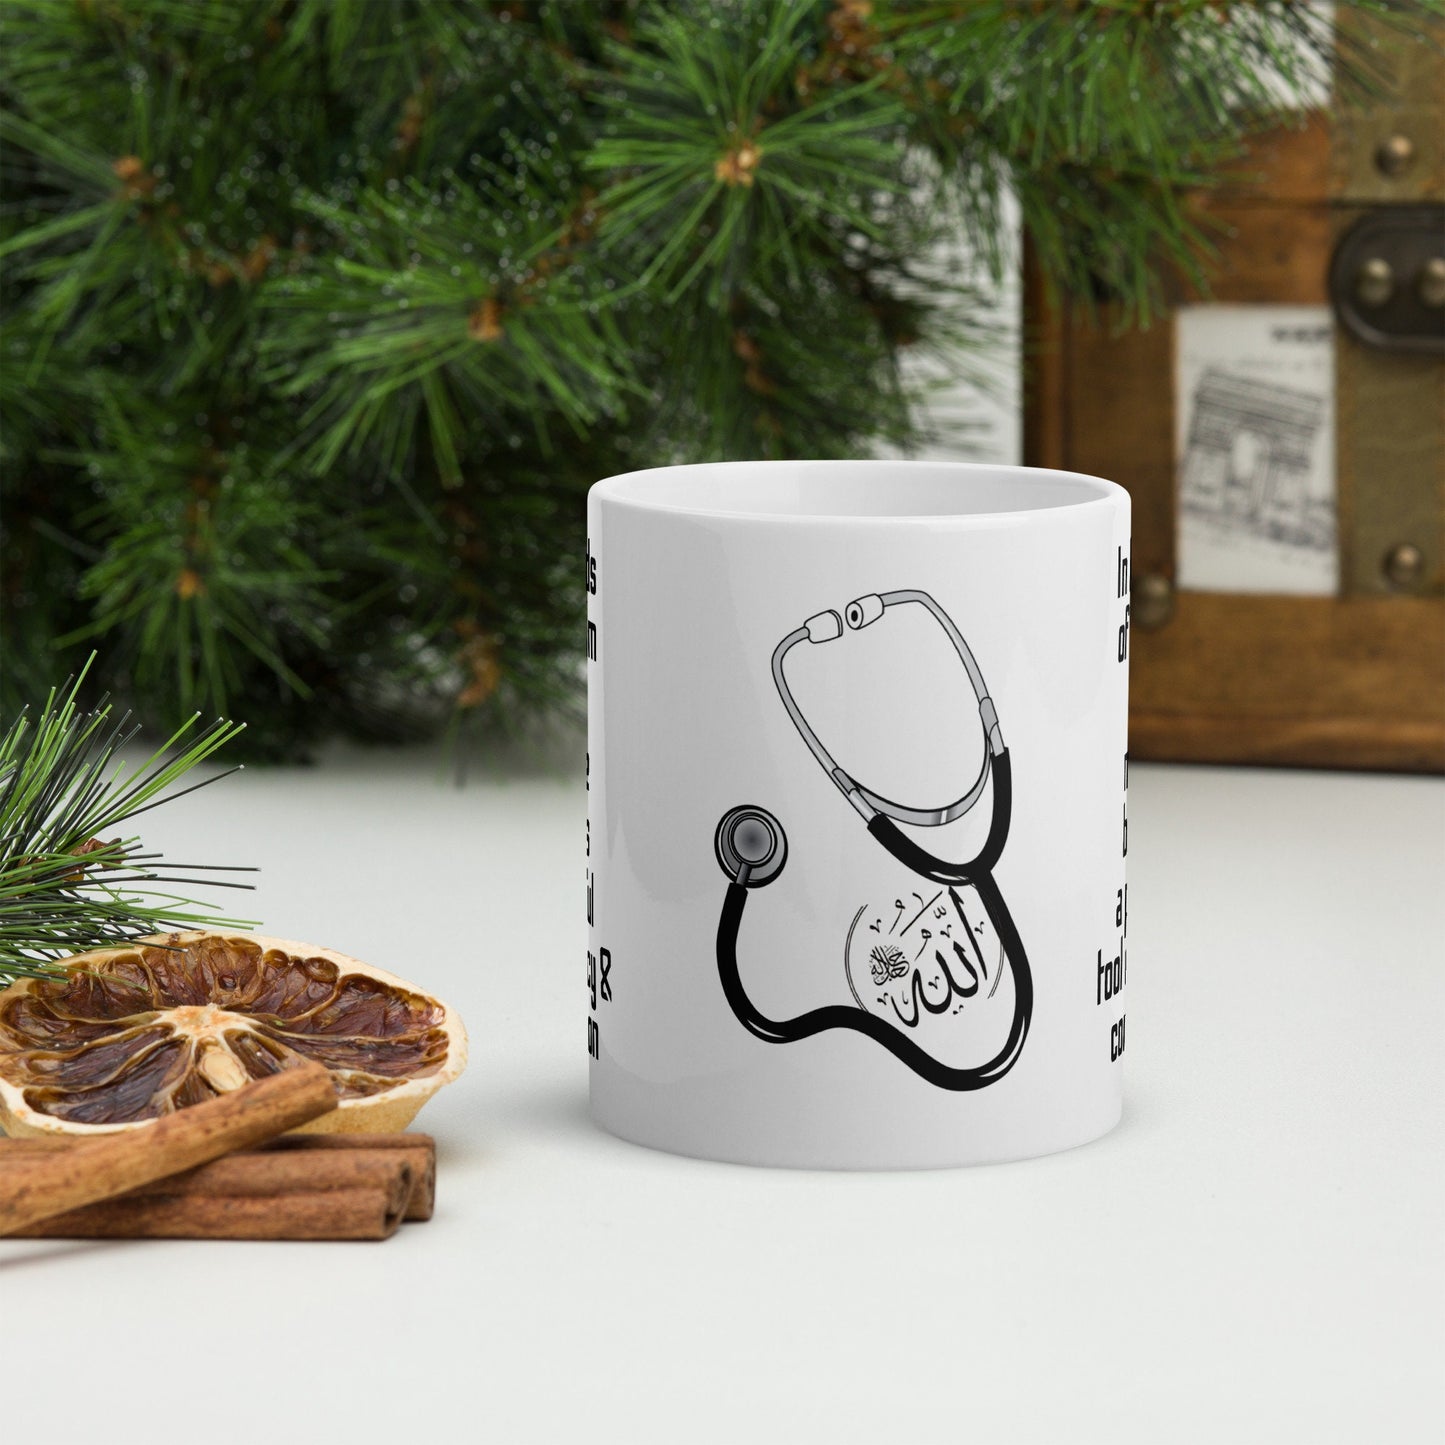 Muslim Gifts For Men/Women Muslim Doctor's Coffee Mug Muslim physicians Grad Gifts Medical School Islamic Mug Islamic Gift For Graduating